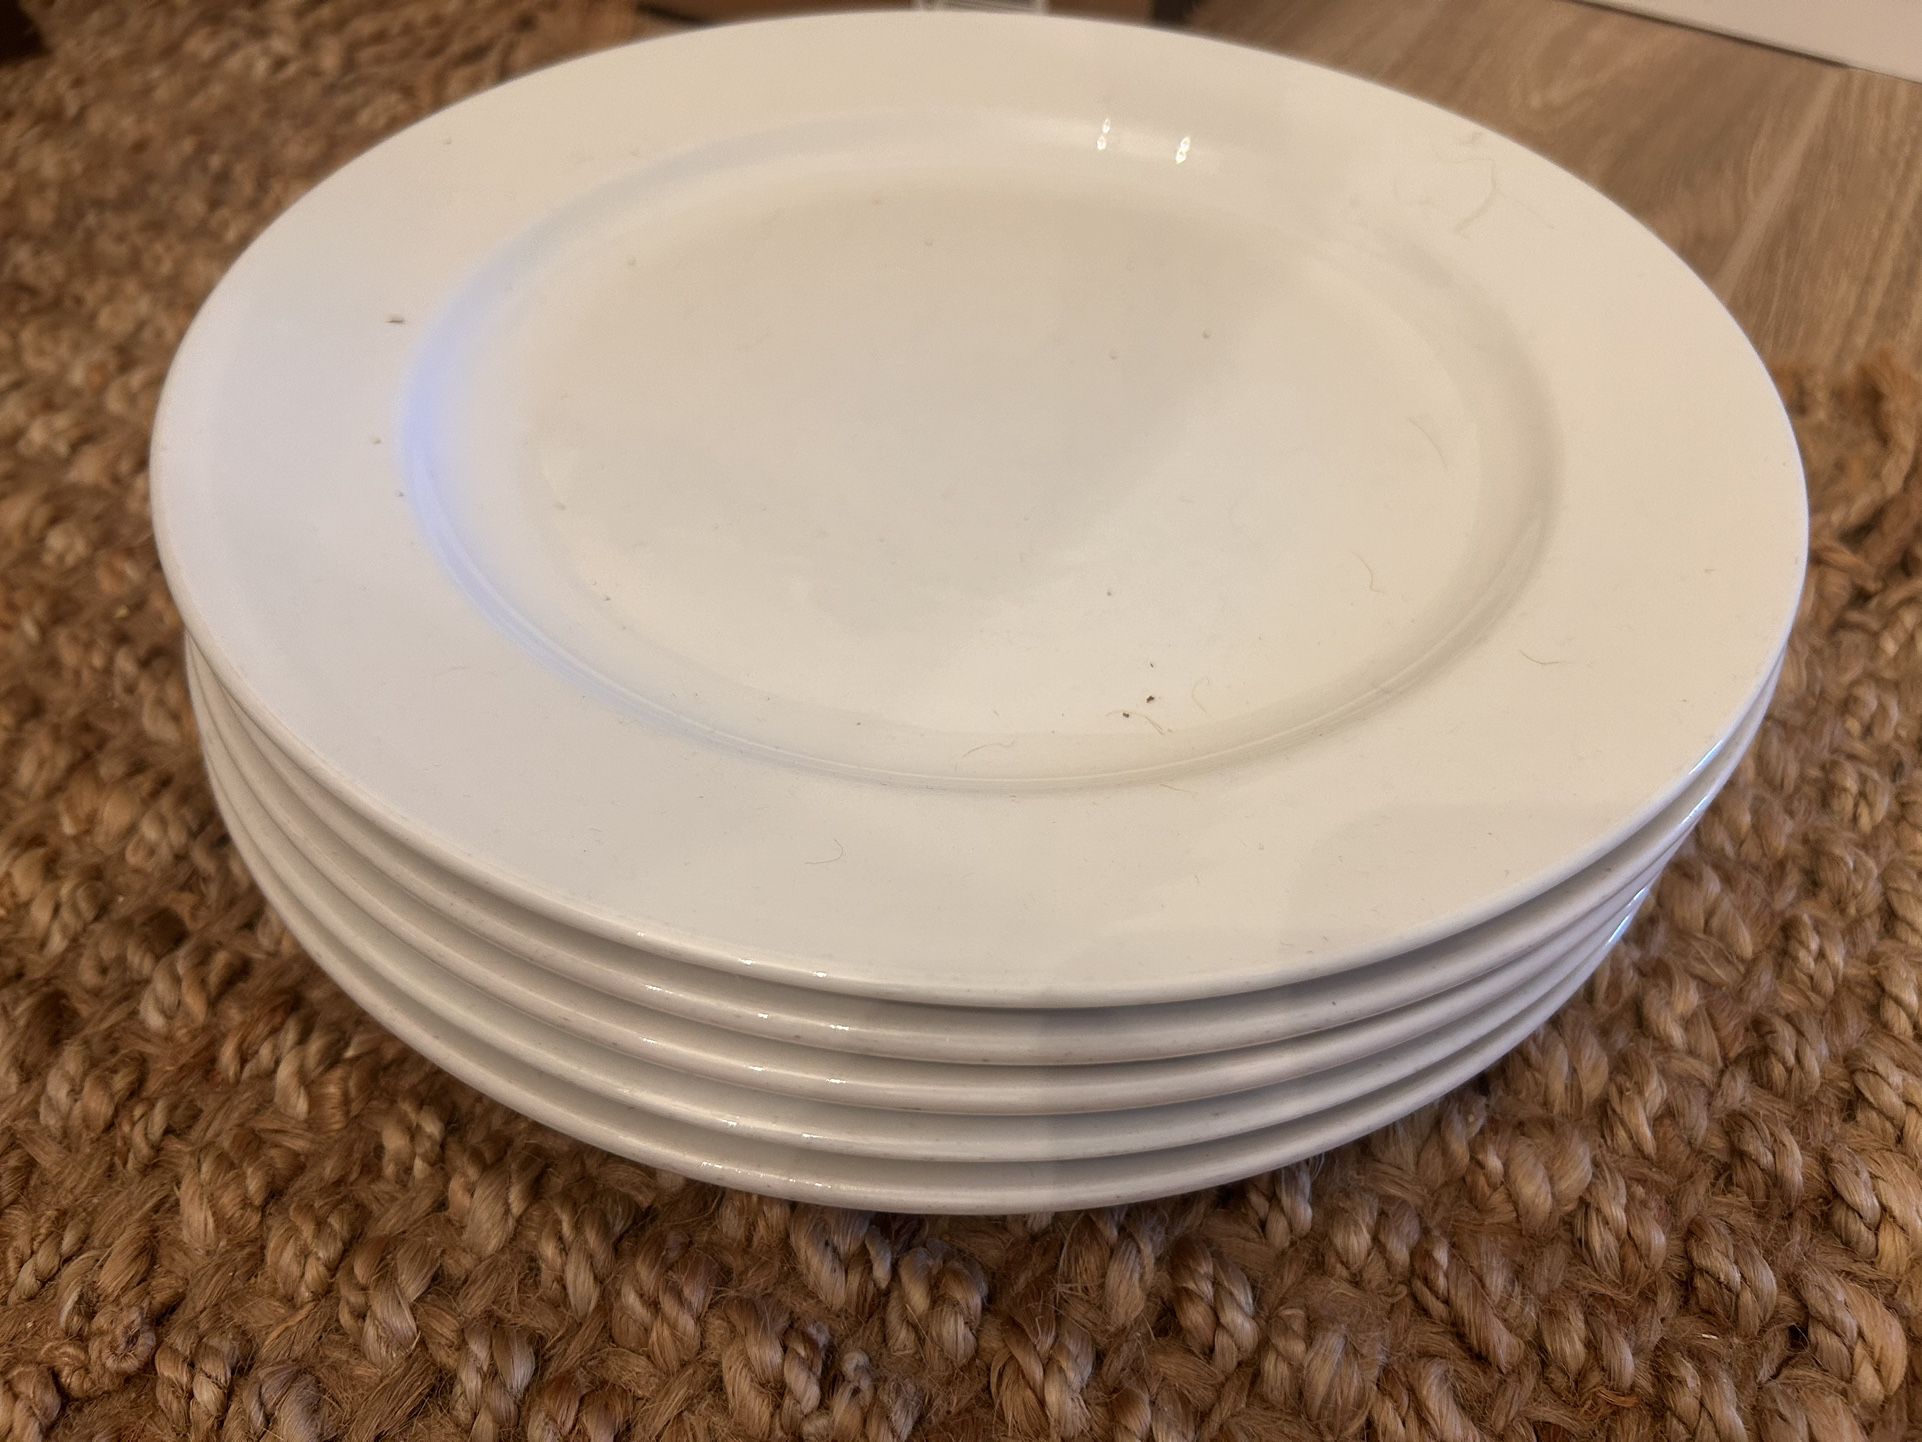 5 Large Plates